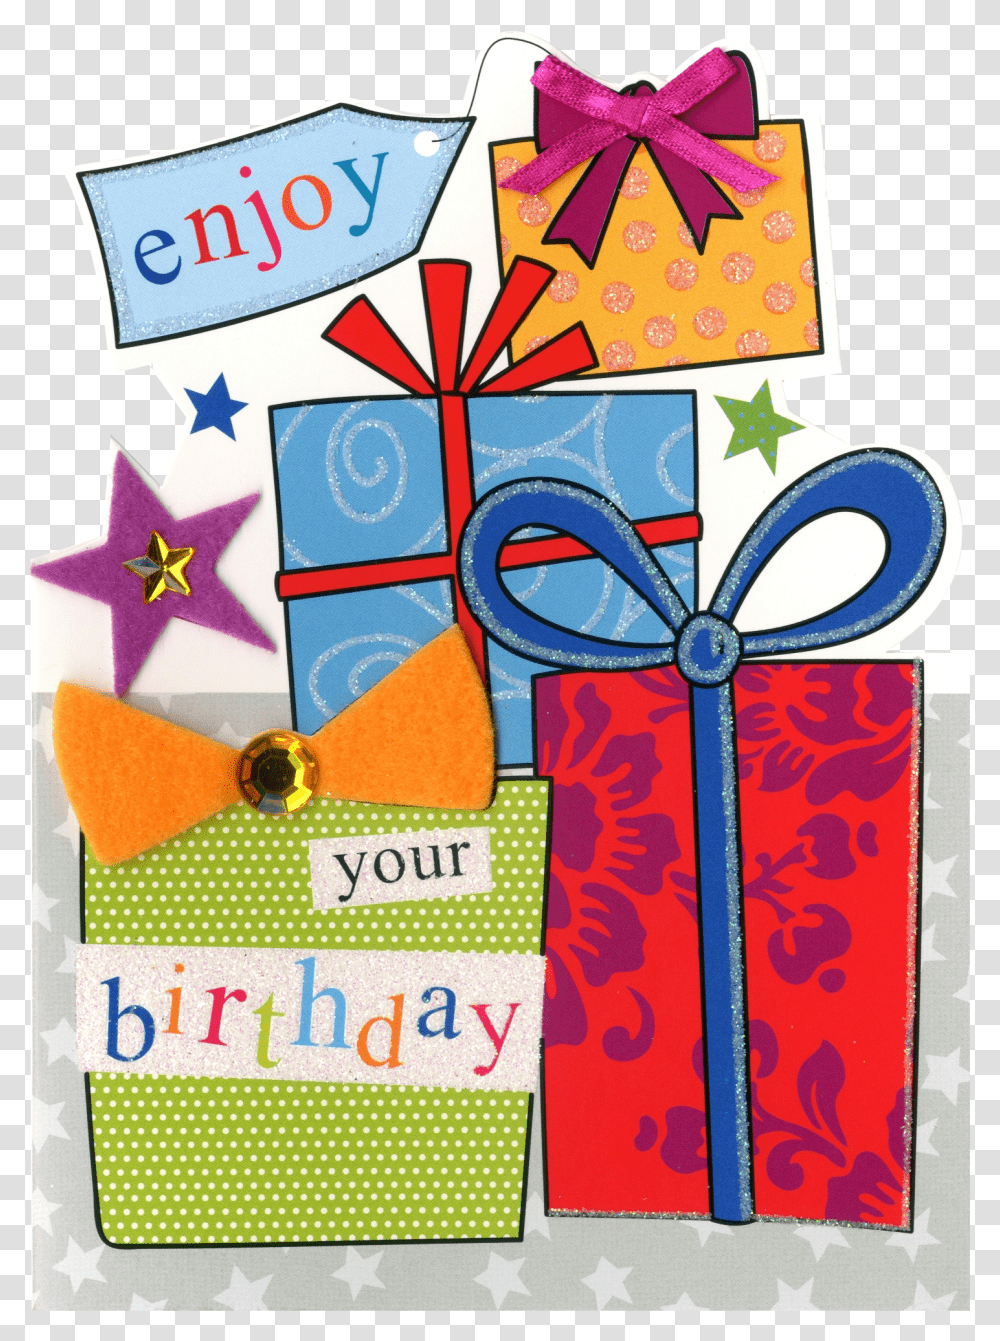 Grandad Happy Birthday Gift Set Keyring Amp Magnet 50 85 Enjoy Your Birthday Transparent Png